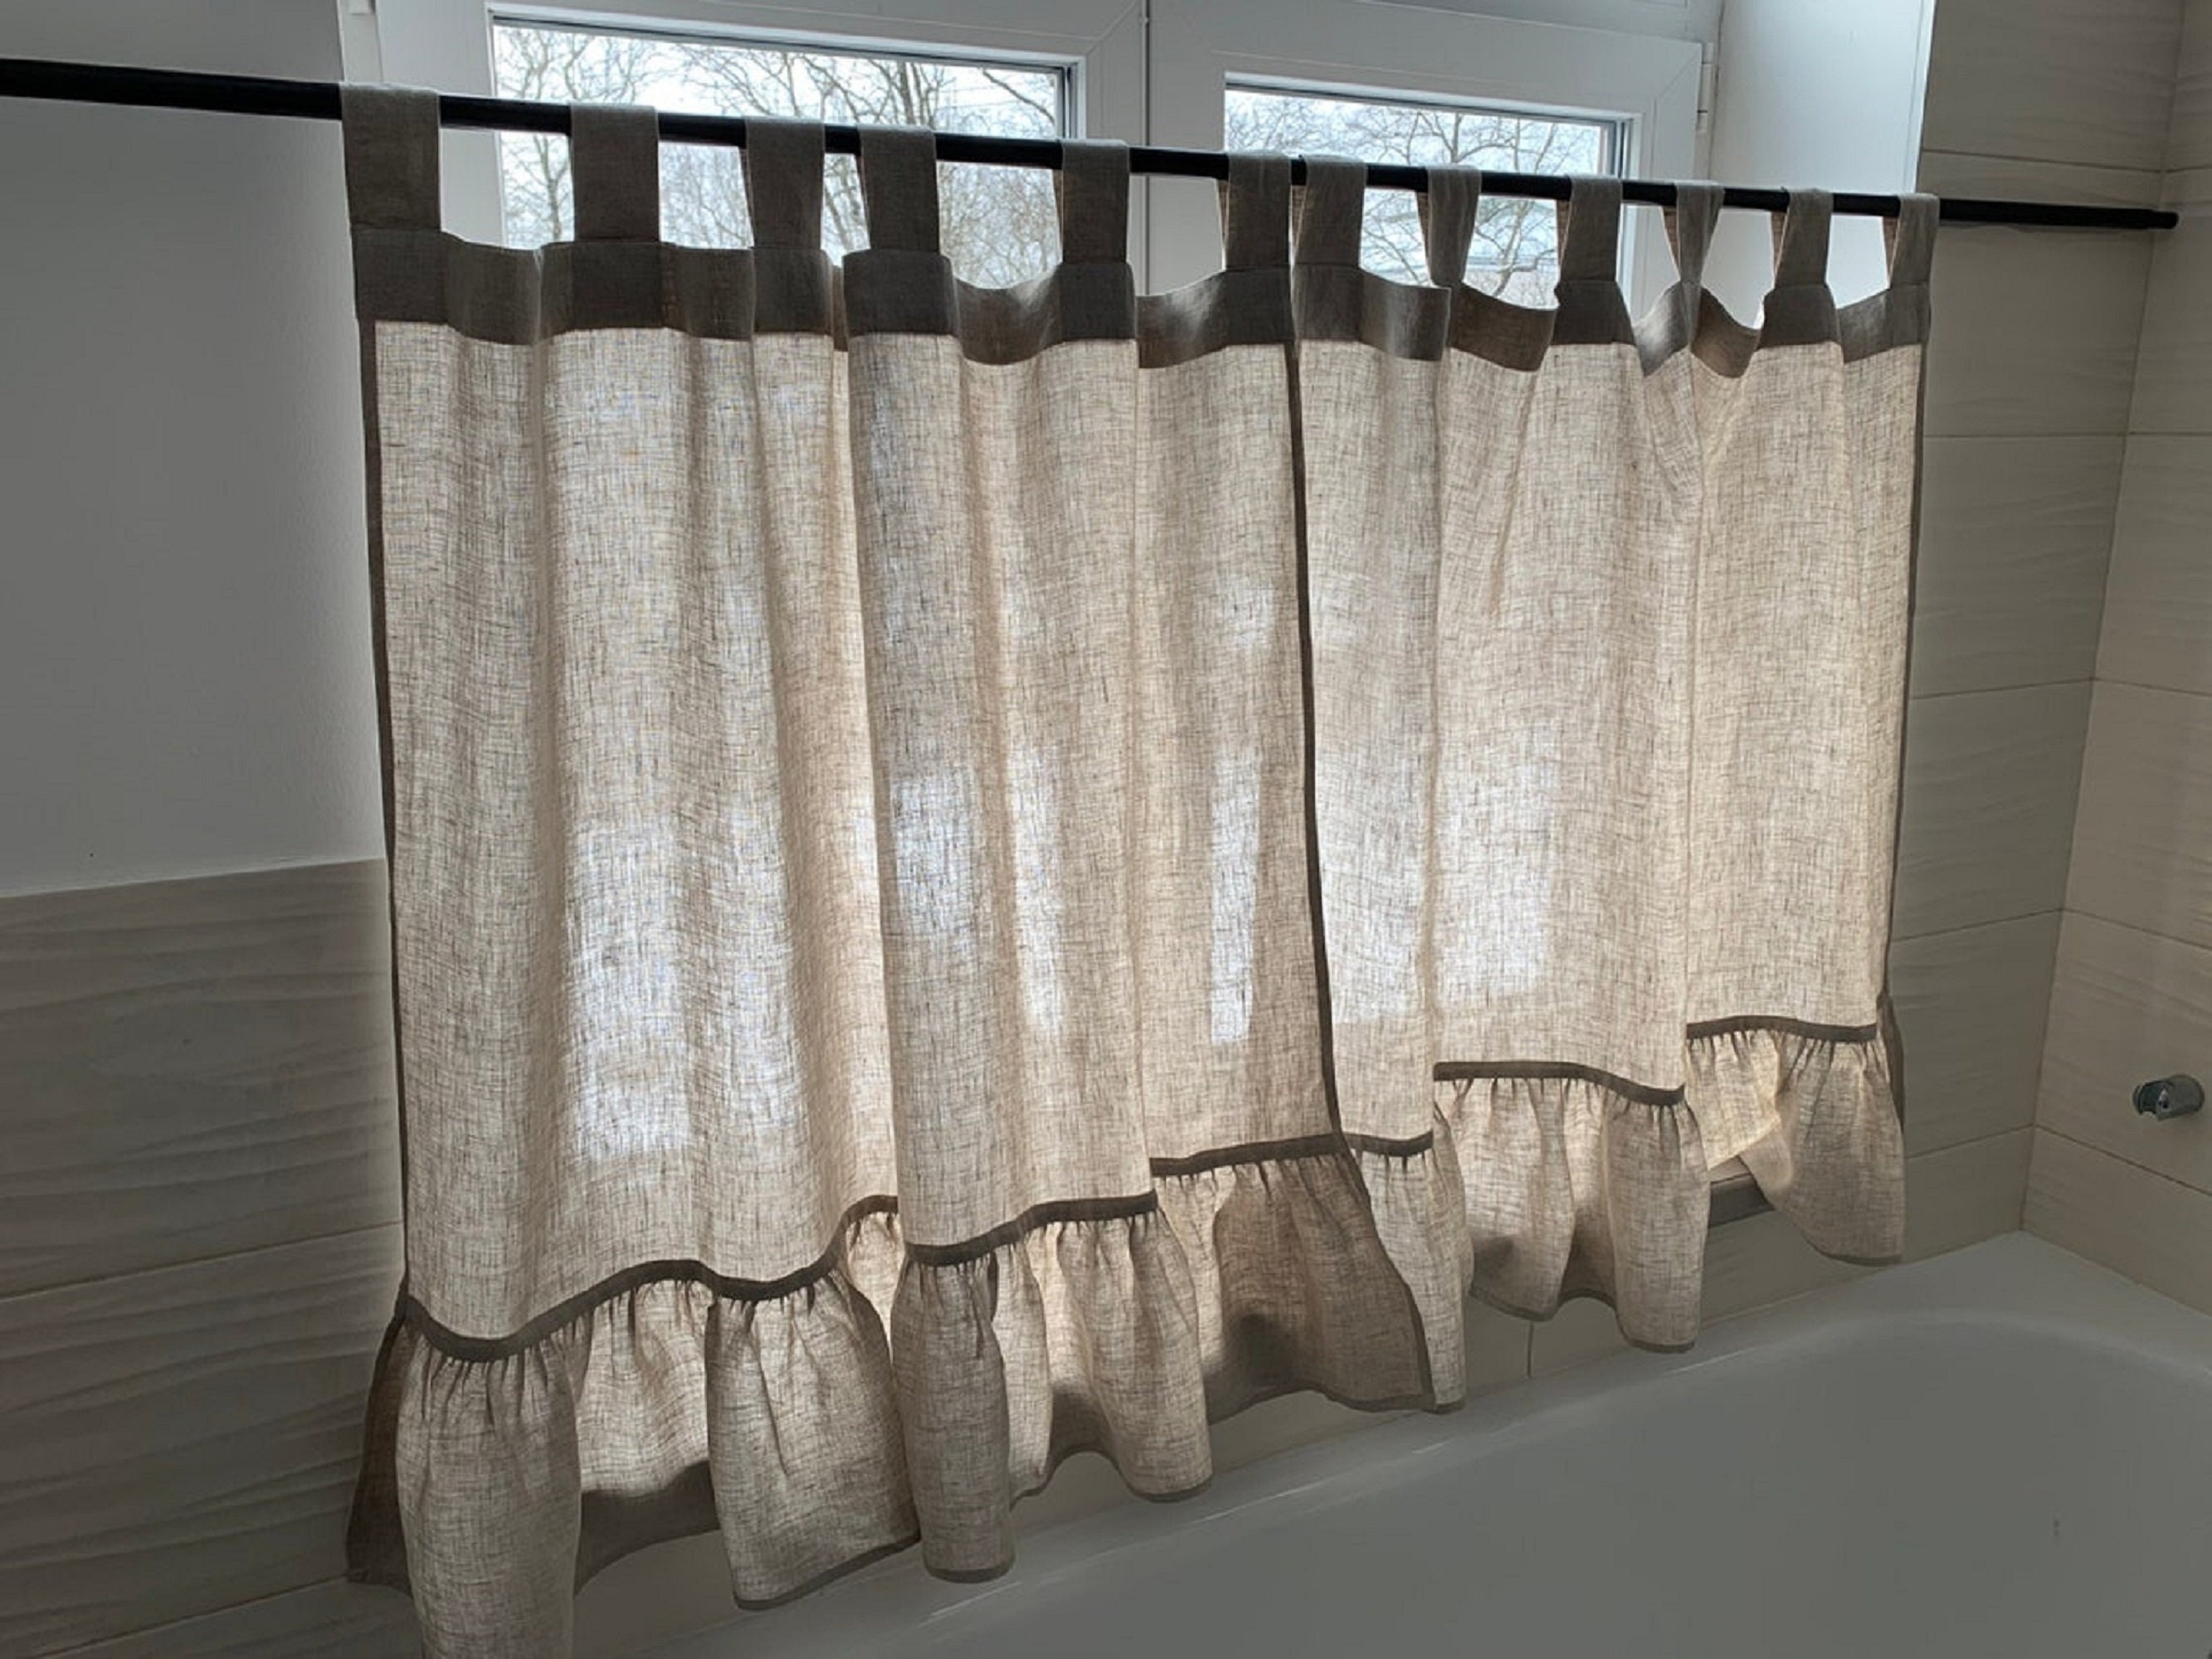 Barra de cortina negra de 48 a 84 pulgadas, barras ajustables con remates  decorativos para ventanas de 27 a 60 pulgadas, barra de cortinas de acero